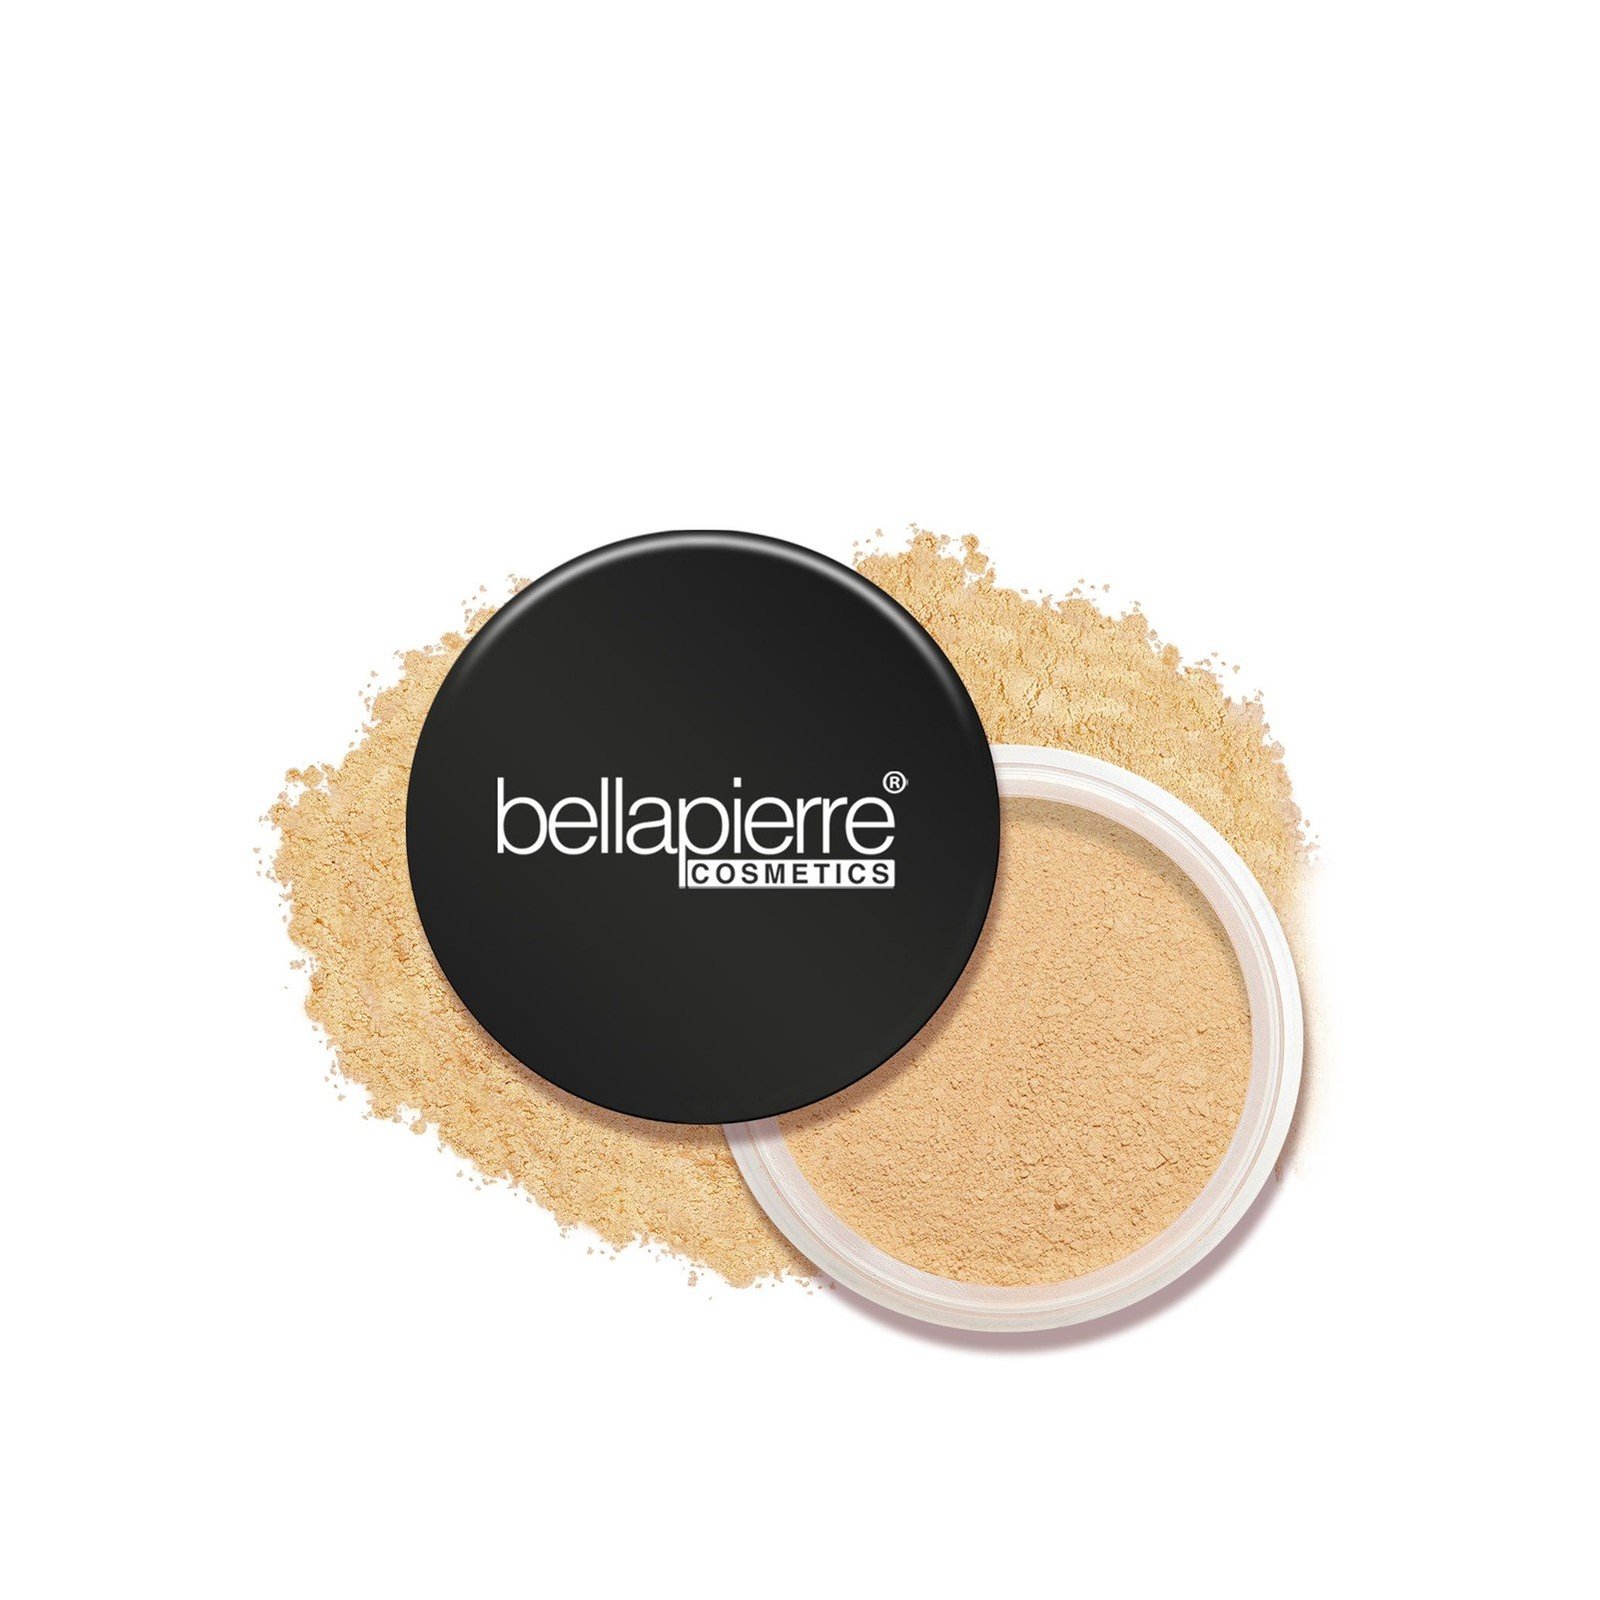 Bellapierre Cosmetics Mineral Foundation SPF15 Nutmeg 9g